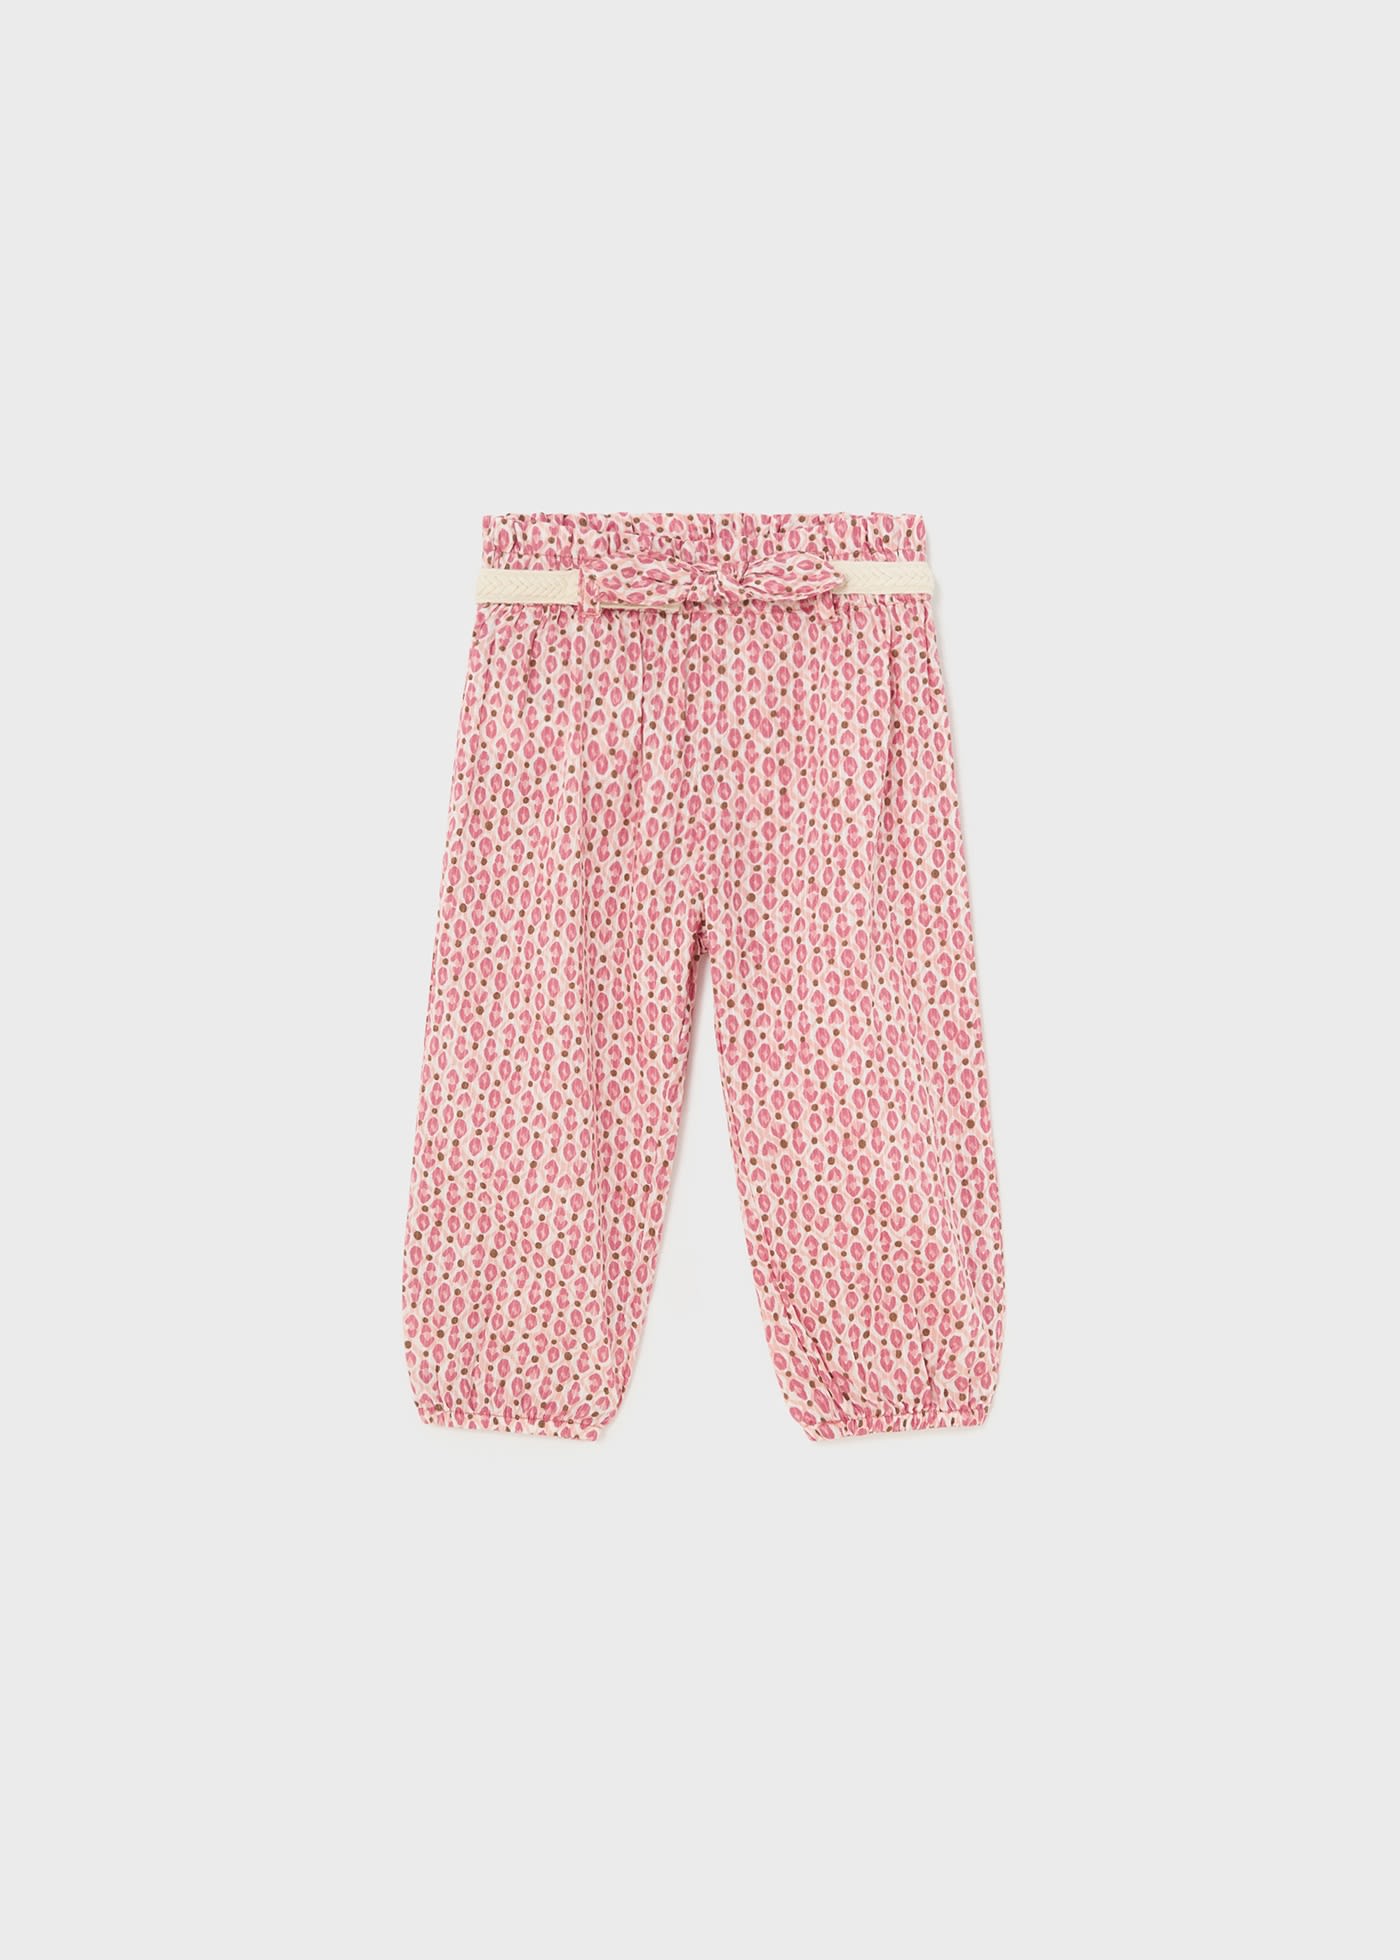 Pantalone largo con cinta neonata